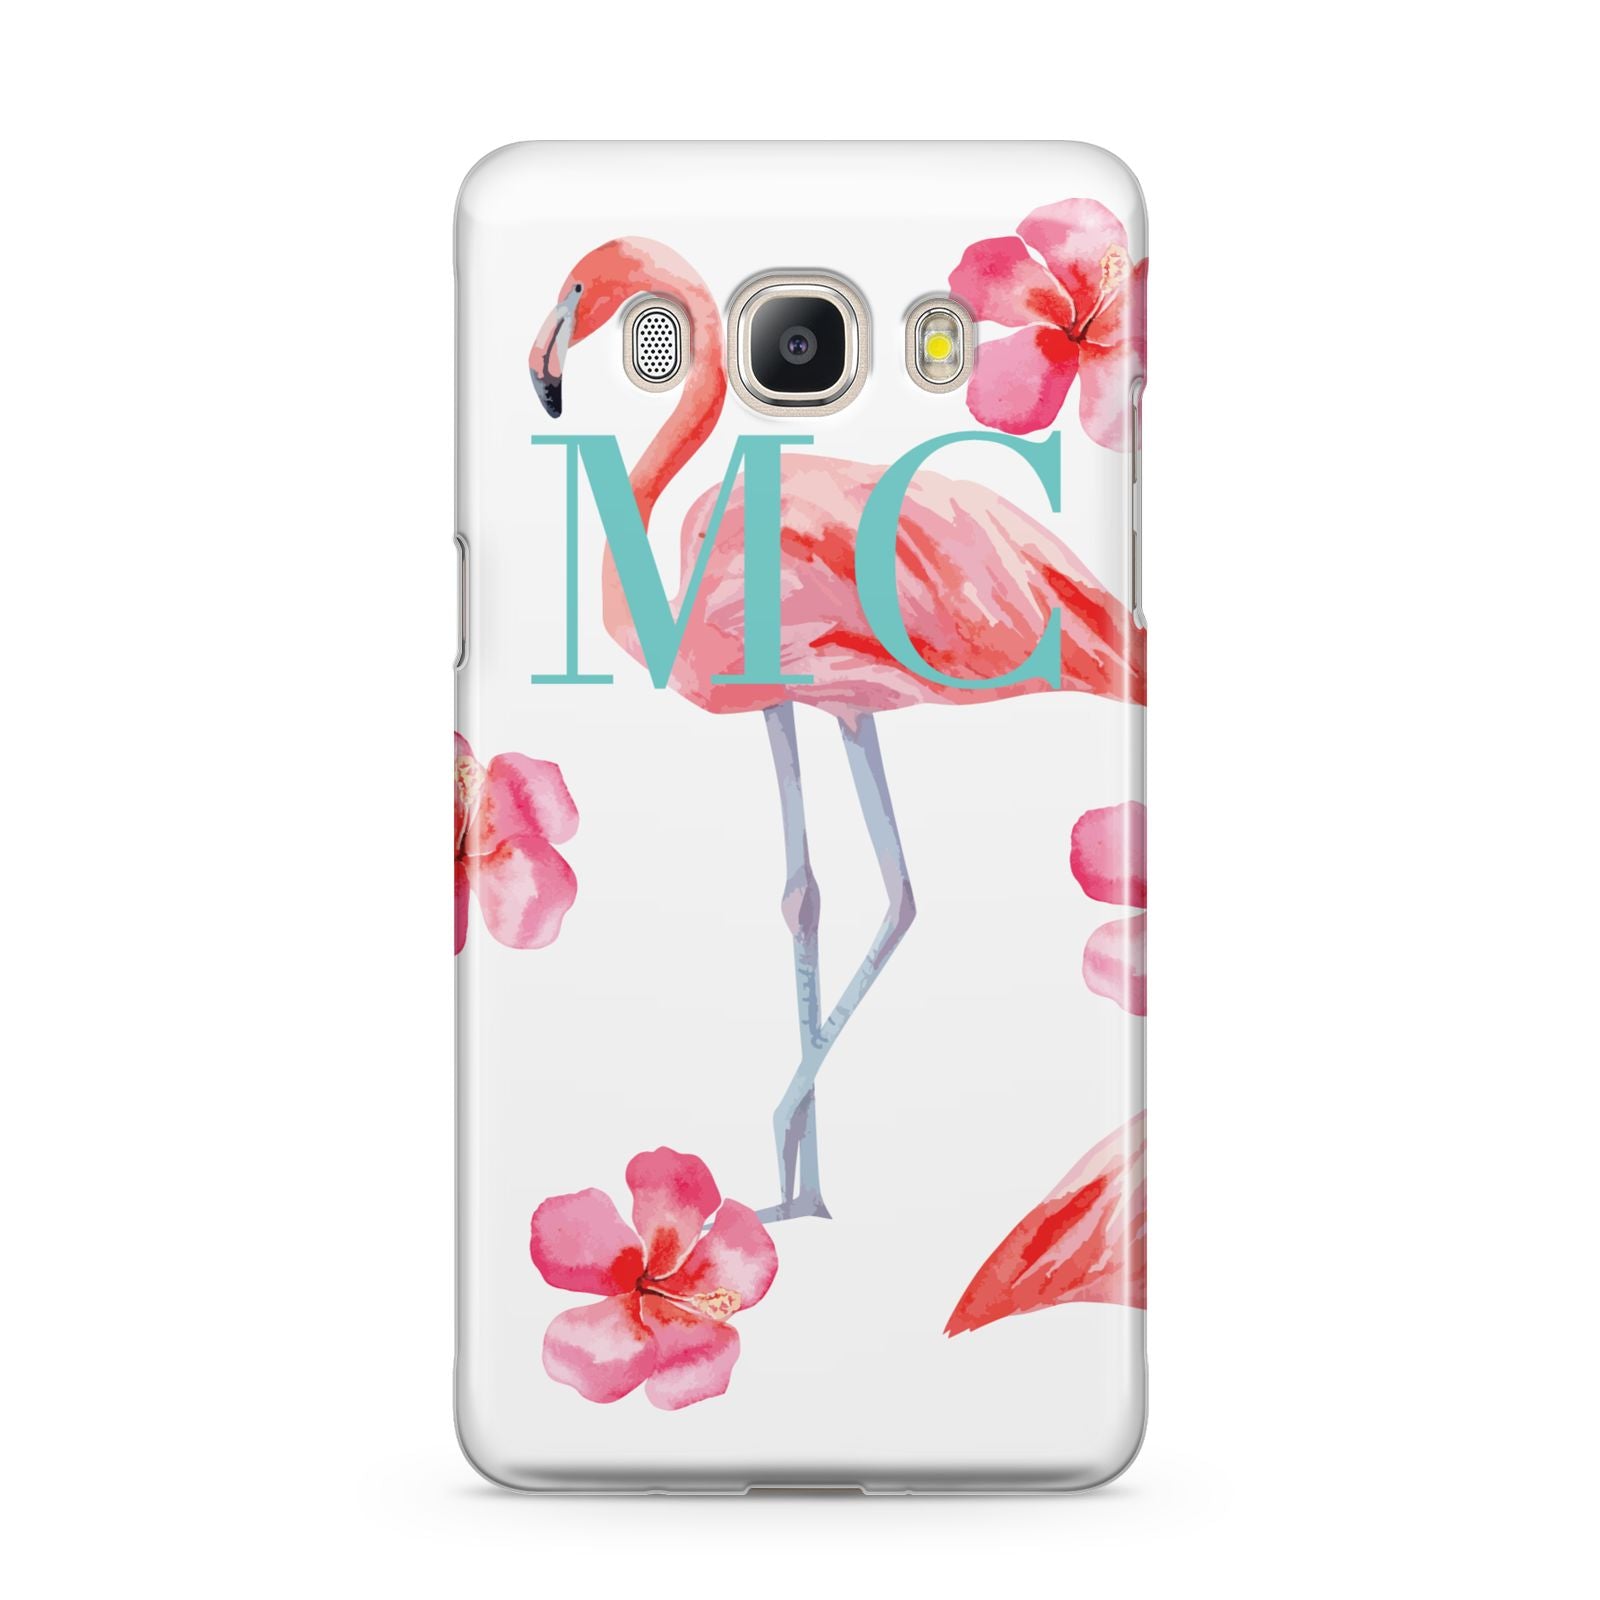 Personalised Initials Flamingo 3 Samsung Galaxy J5 2016 Case